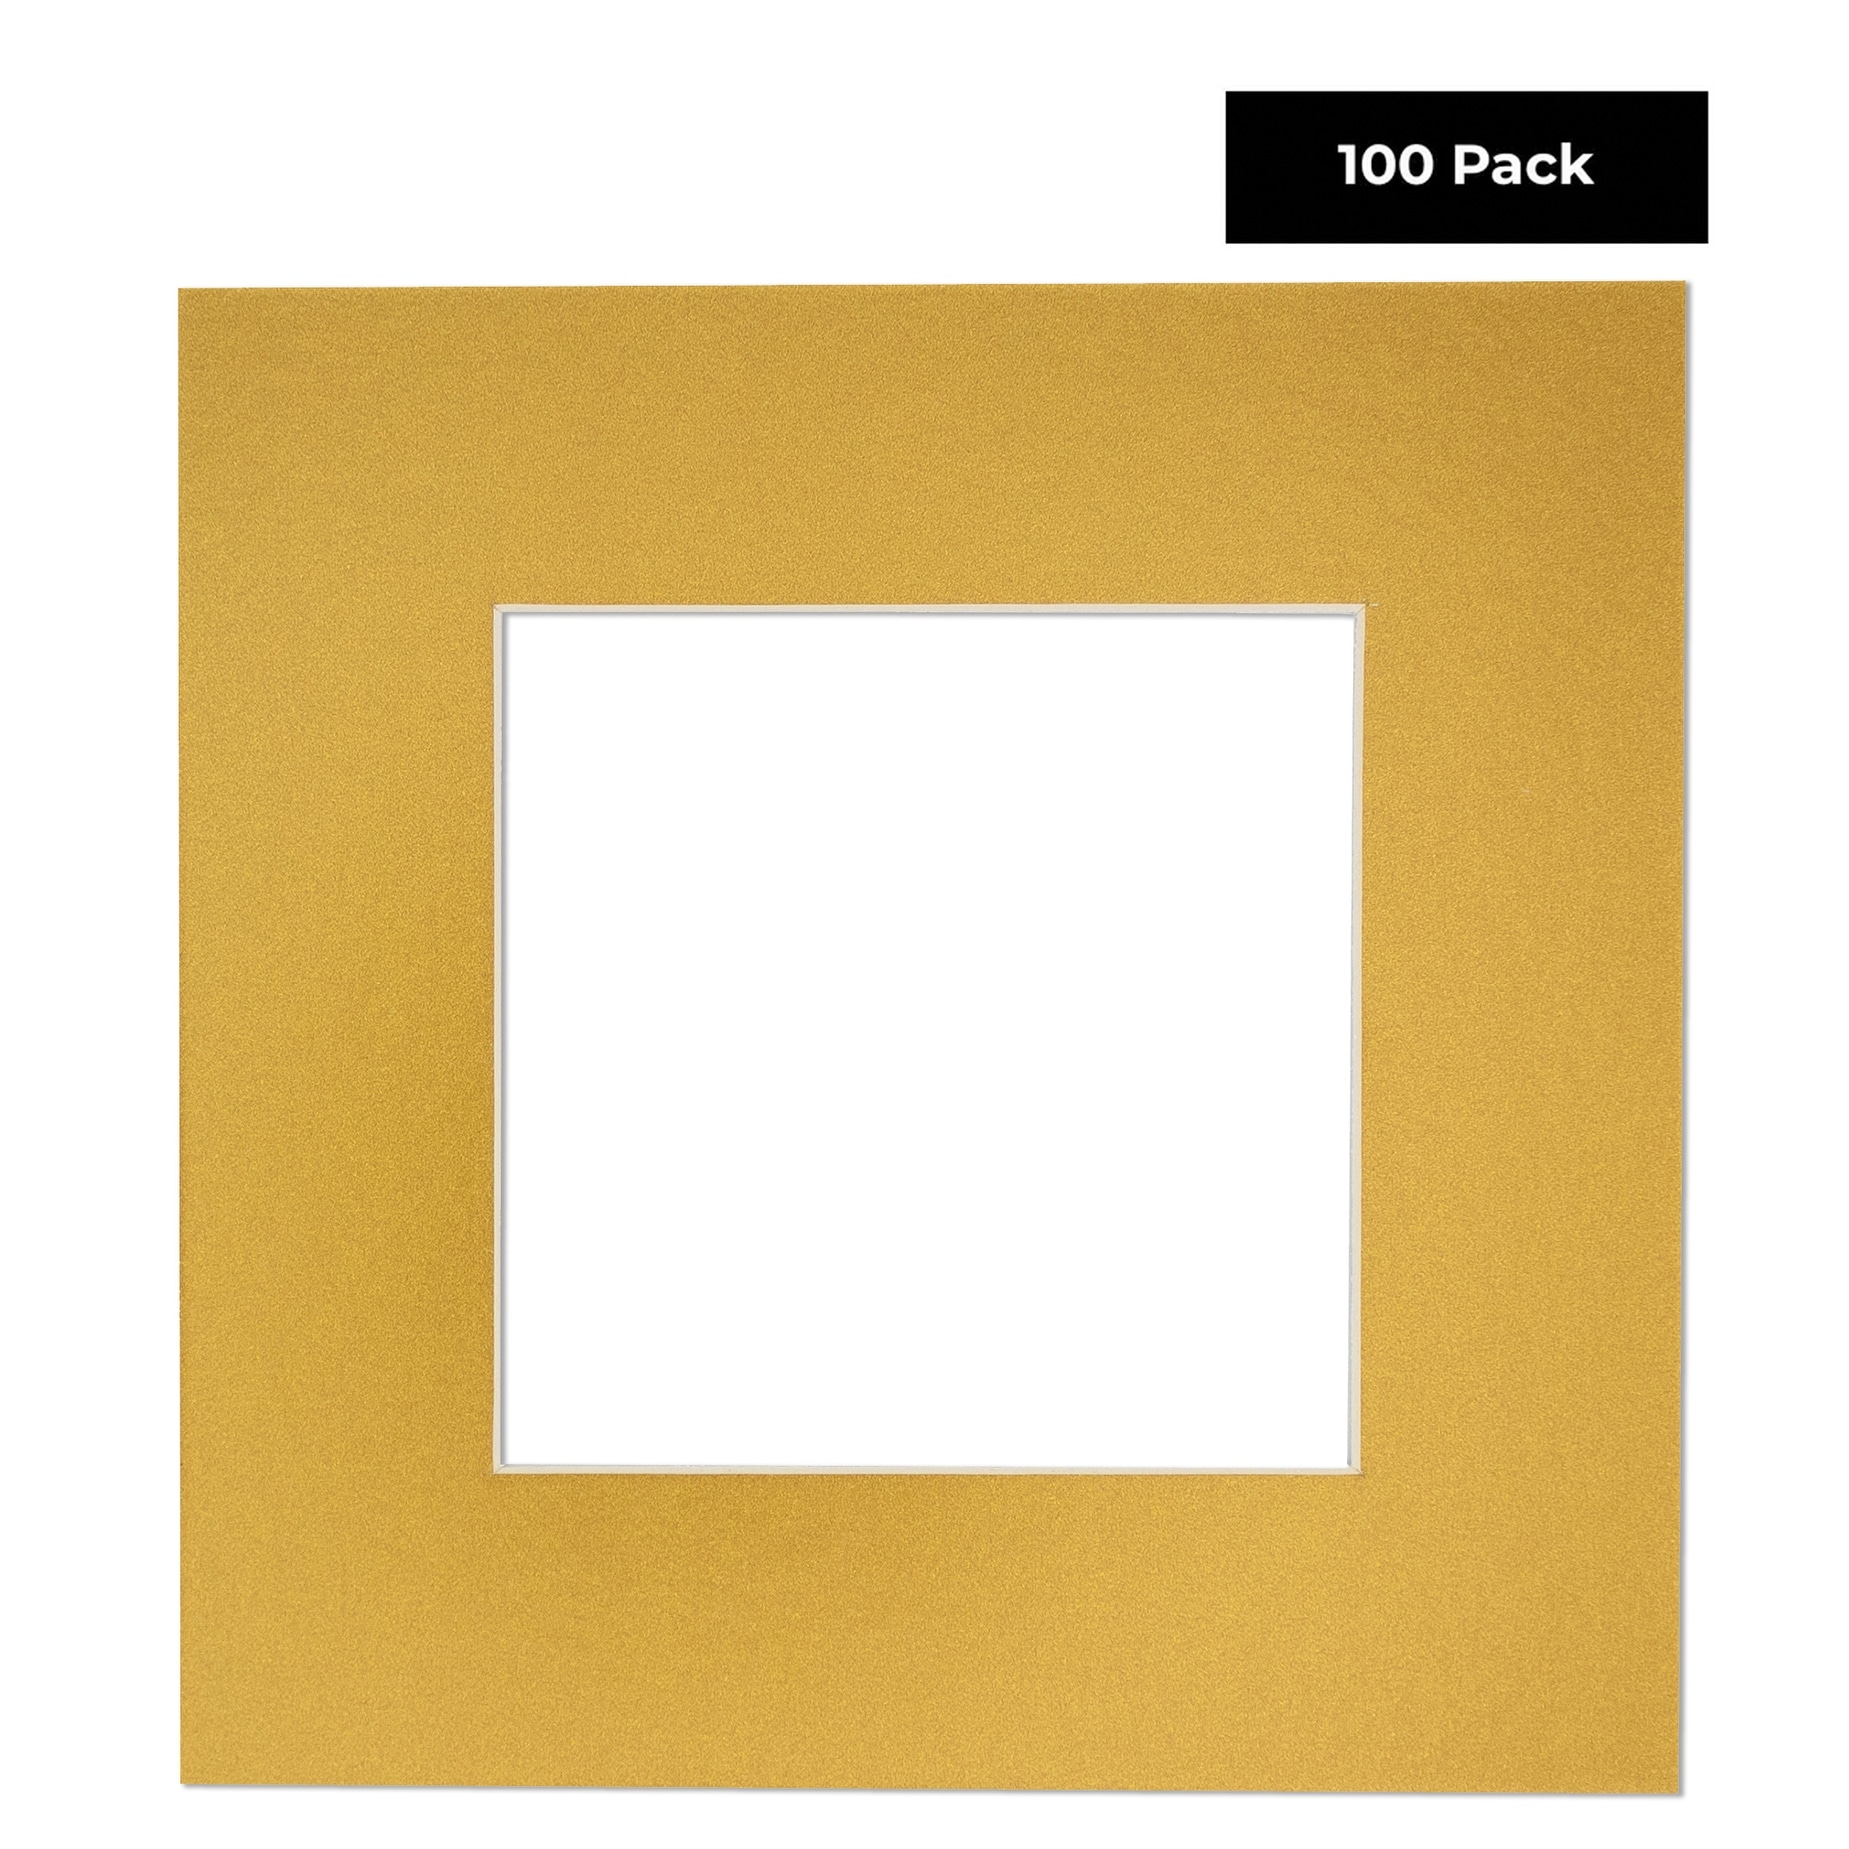 8x10 Mat for 10x12 Frame - Precut Mat Board Acid-Free Metallic Gold 8x10 Photo Matte for A 10x12 Picture Frame